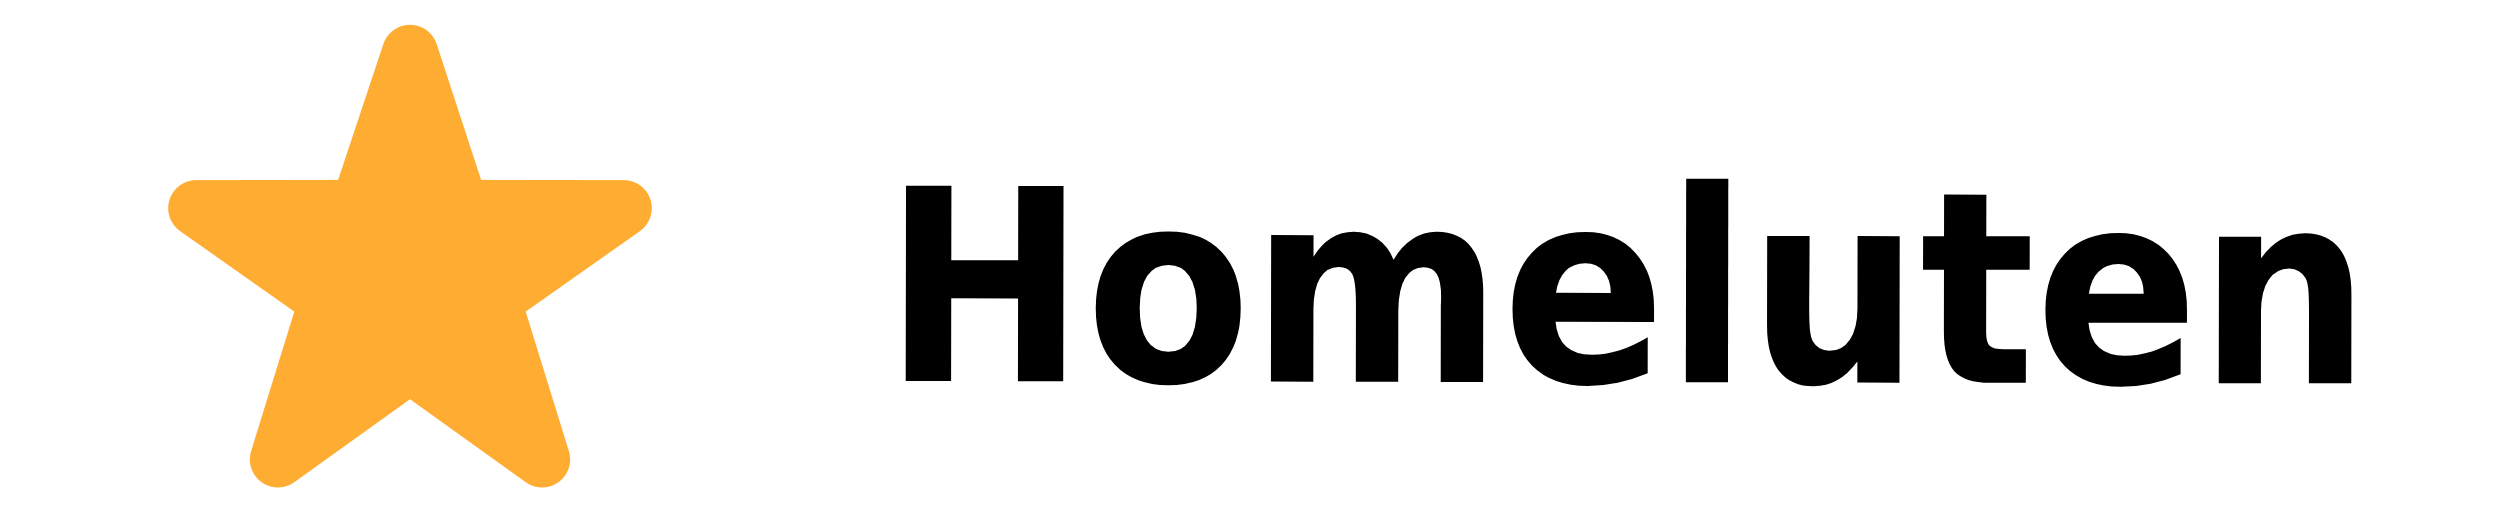 Homeluten Logo